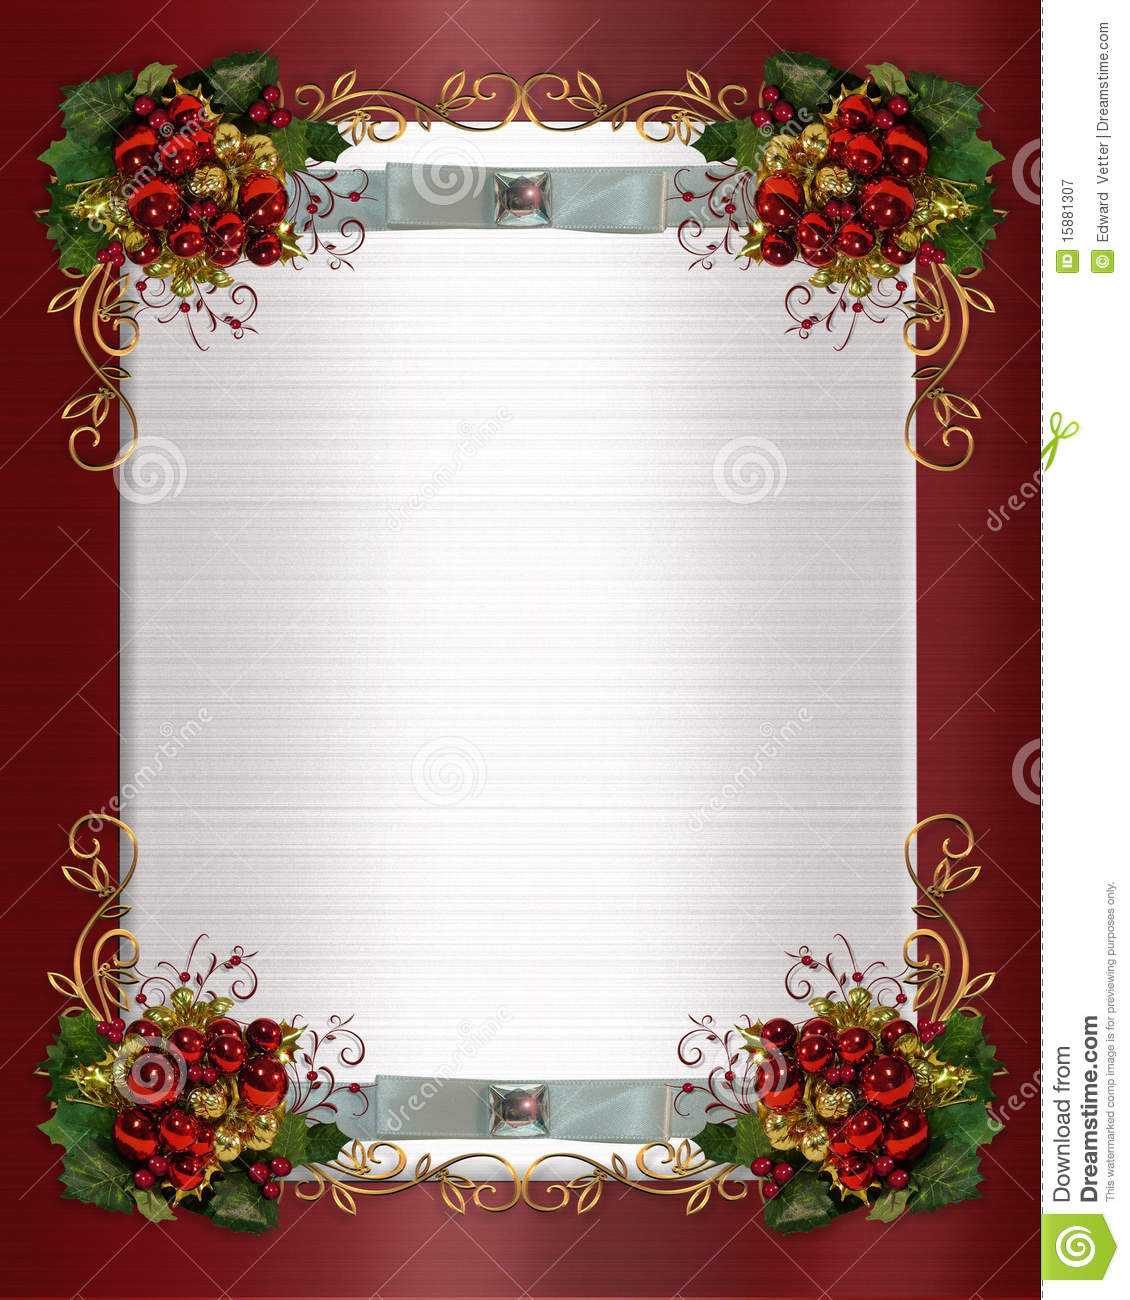 Christmas Or Winter Wedding Border Stock Illustration Regarding Free Christmas Invitation Templates For Word